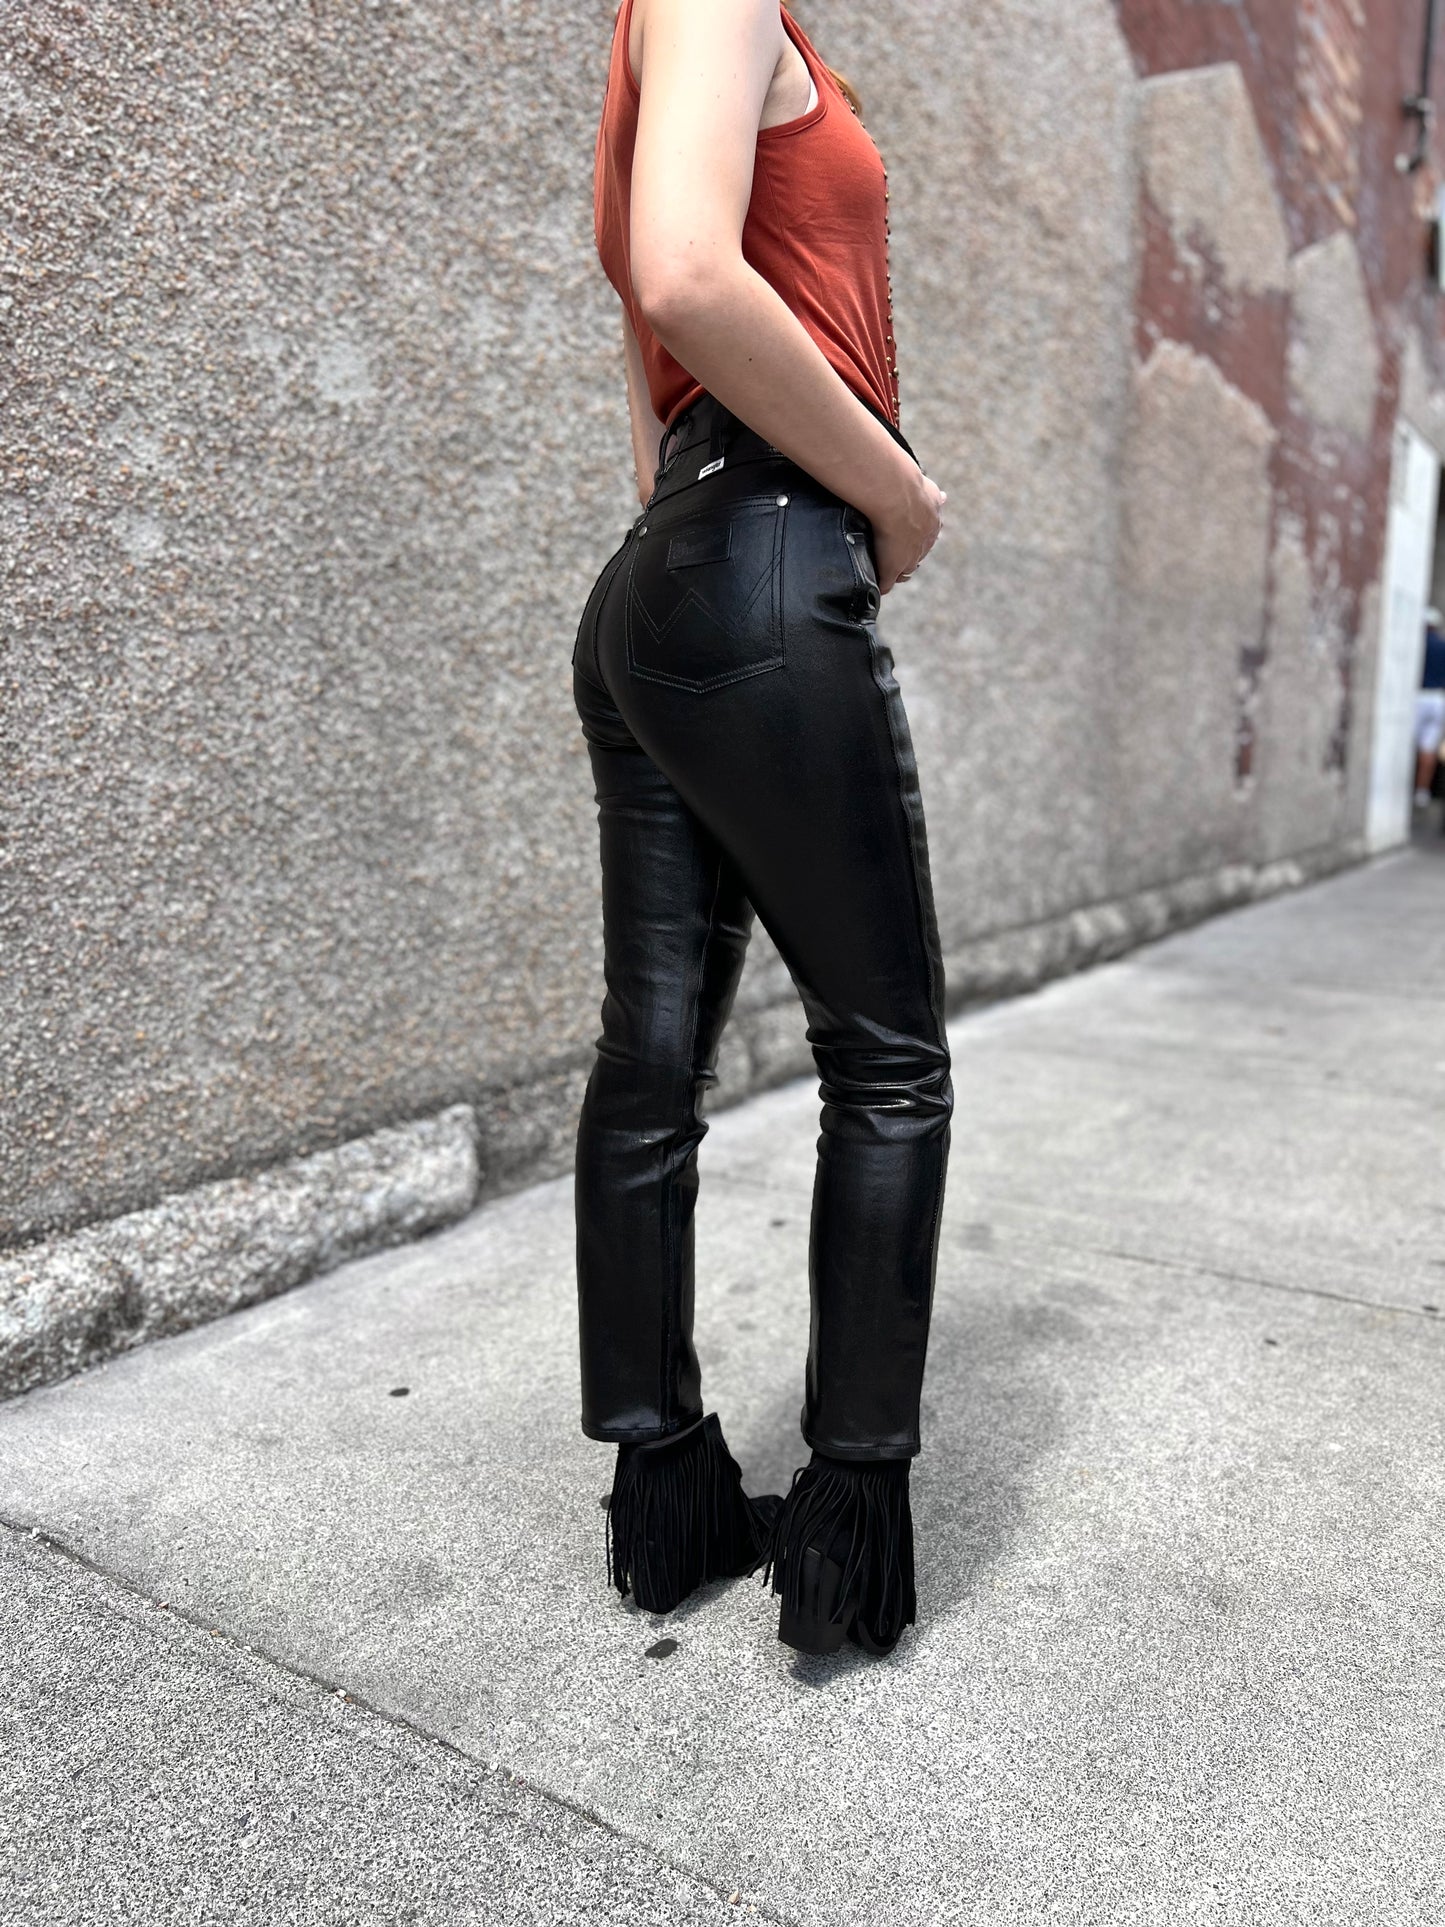 Wrangler Women Kim Kardashian Black Leather